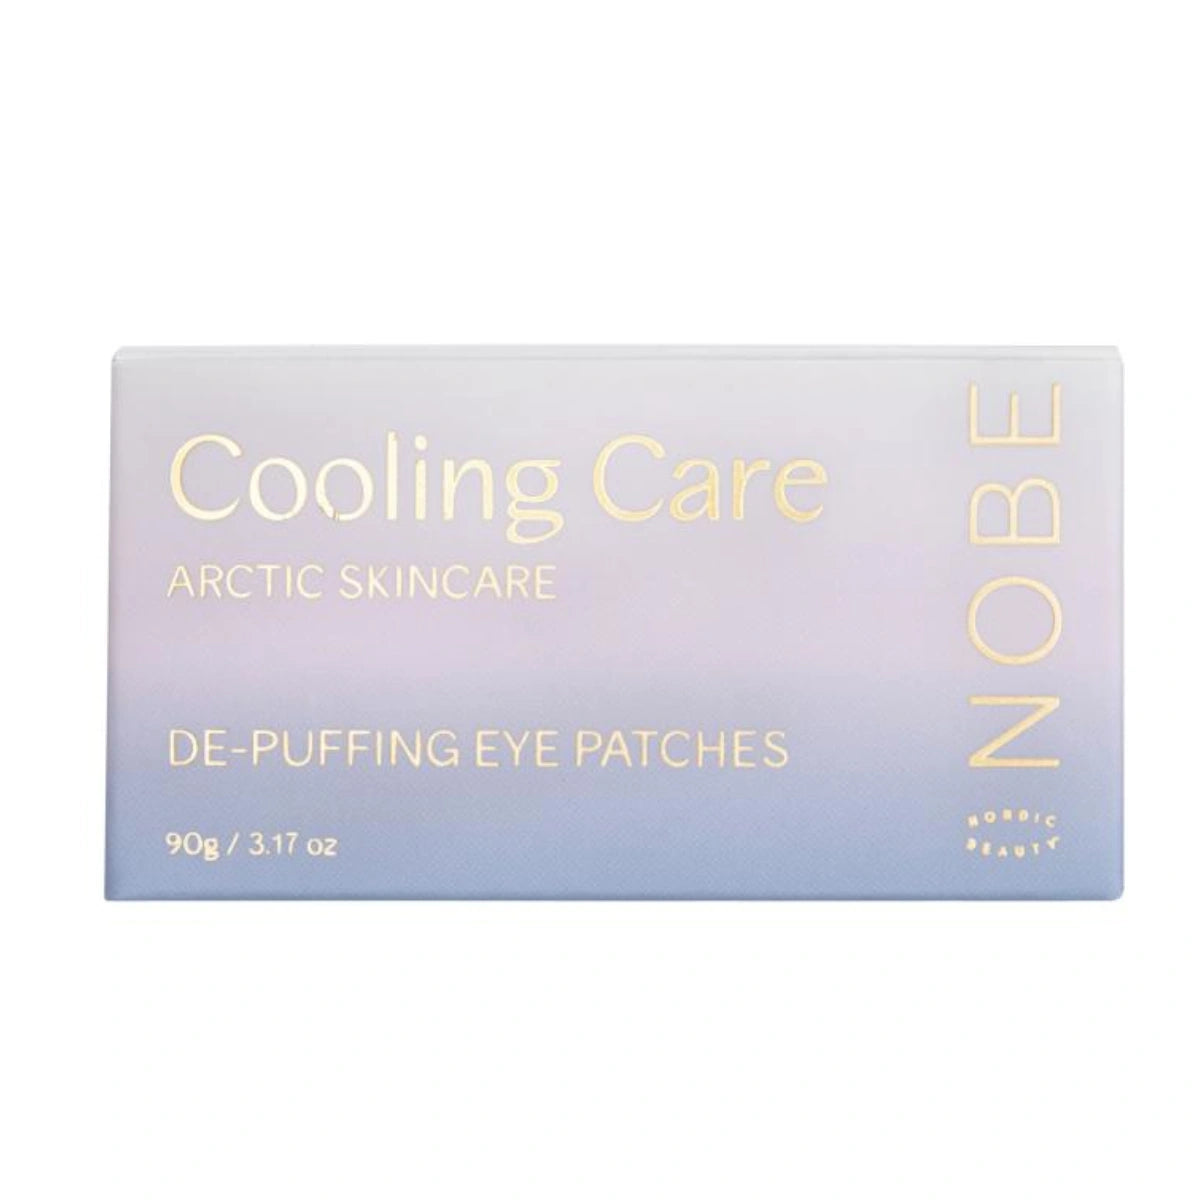 NOBE Cooling Care De-Puffing Eye Patches ulkopakkaus